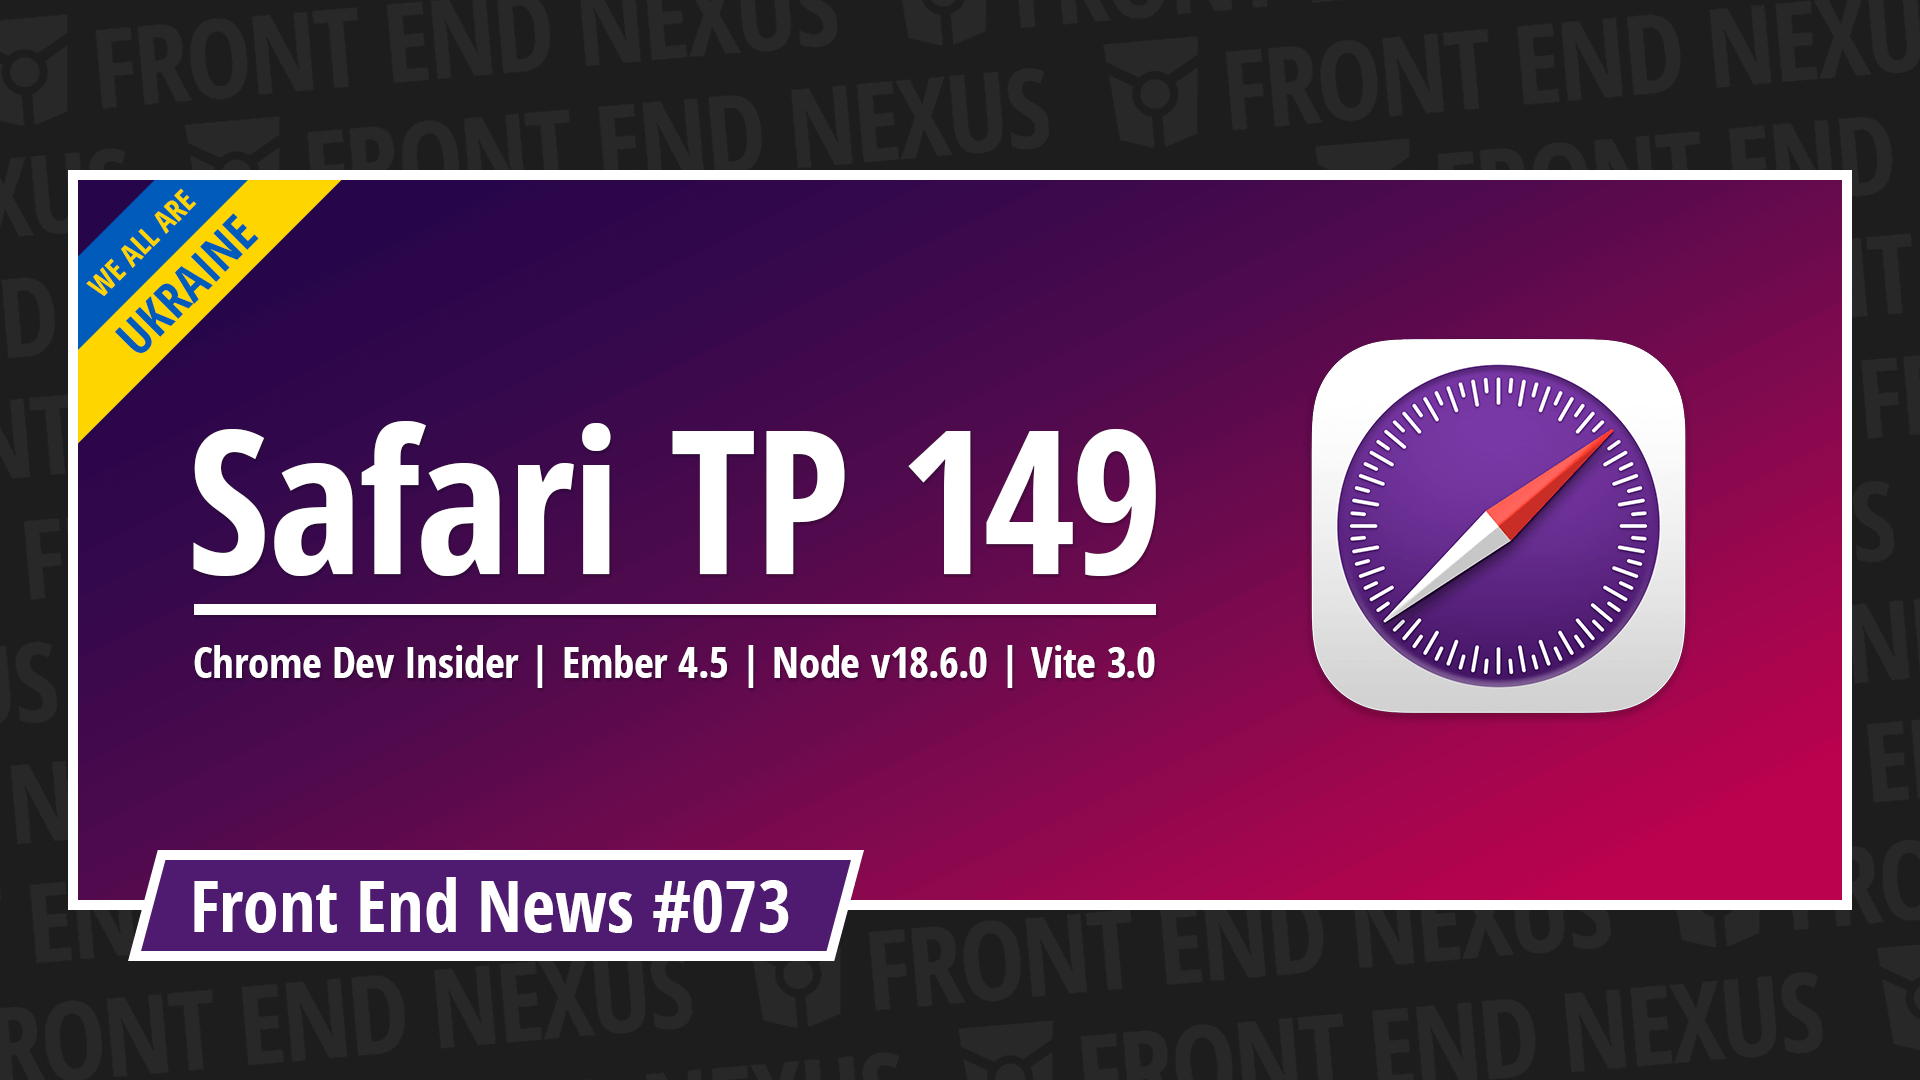 Safari Technology Preview 149, the Chrome Dev Insider, Ember 4.5, Node v18.6.0, Vite 3.0, and more | Front End News #073